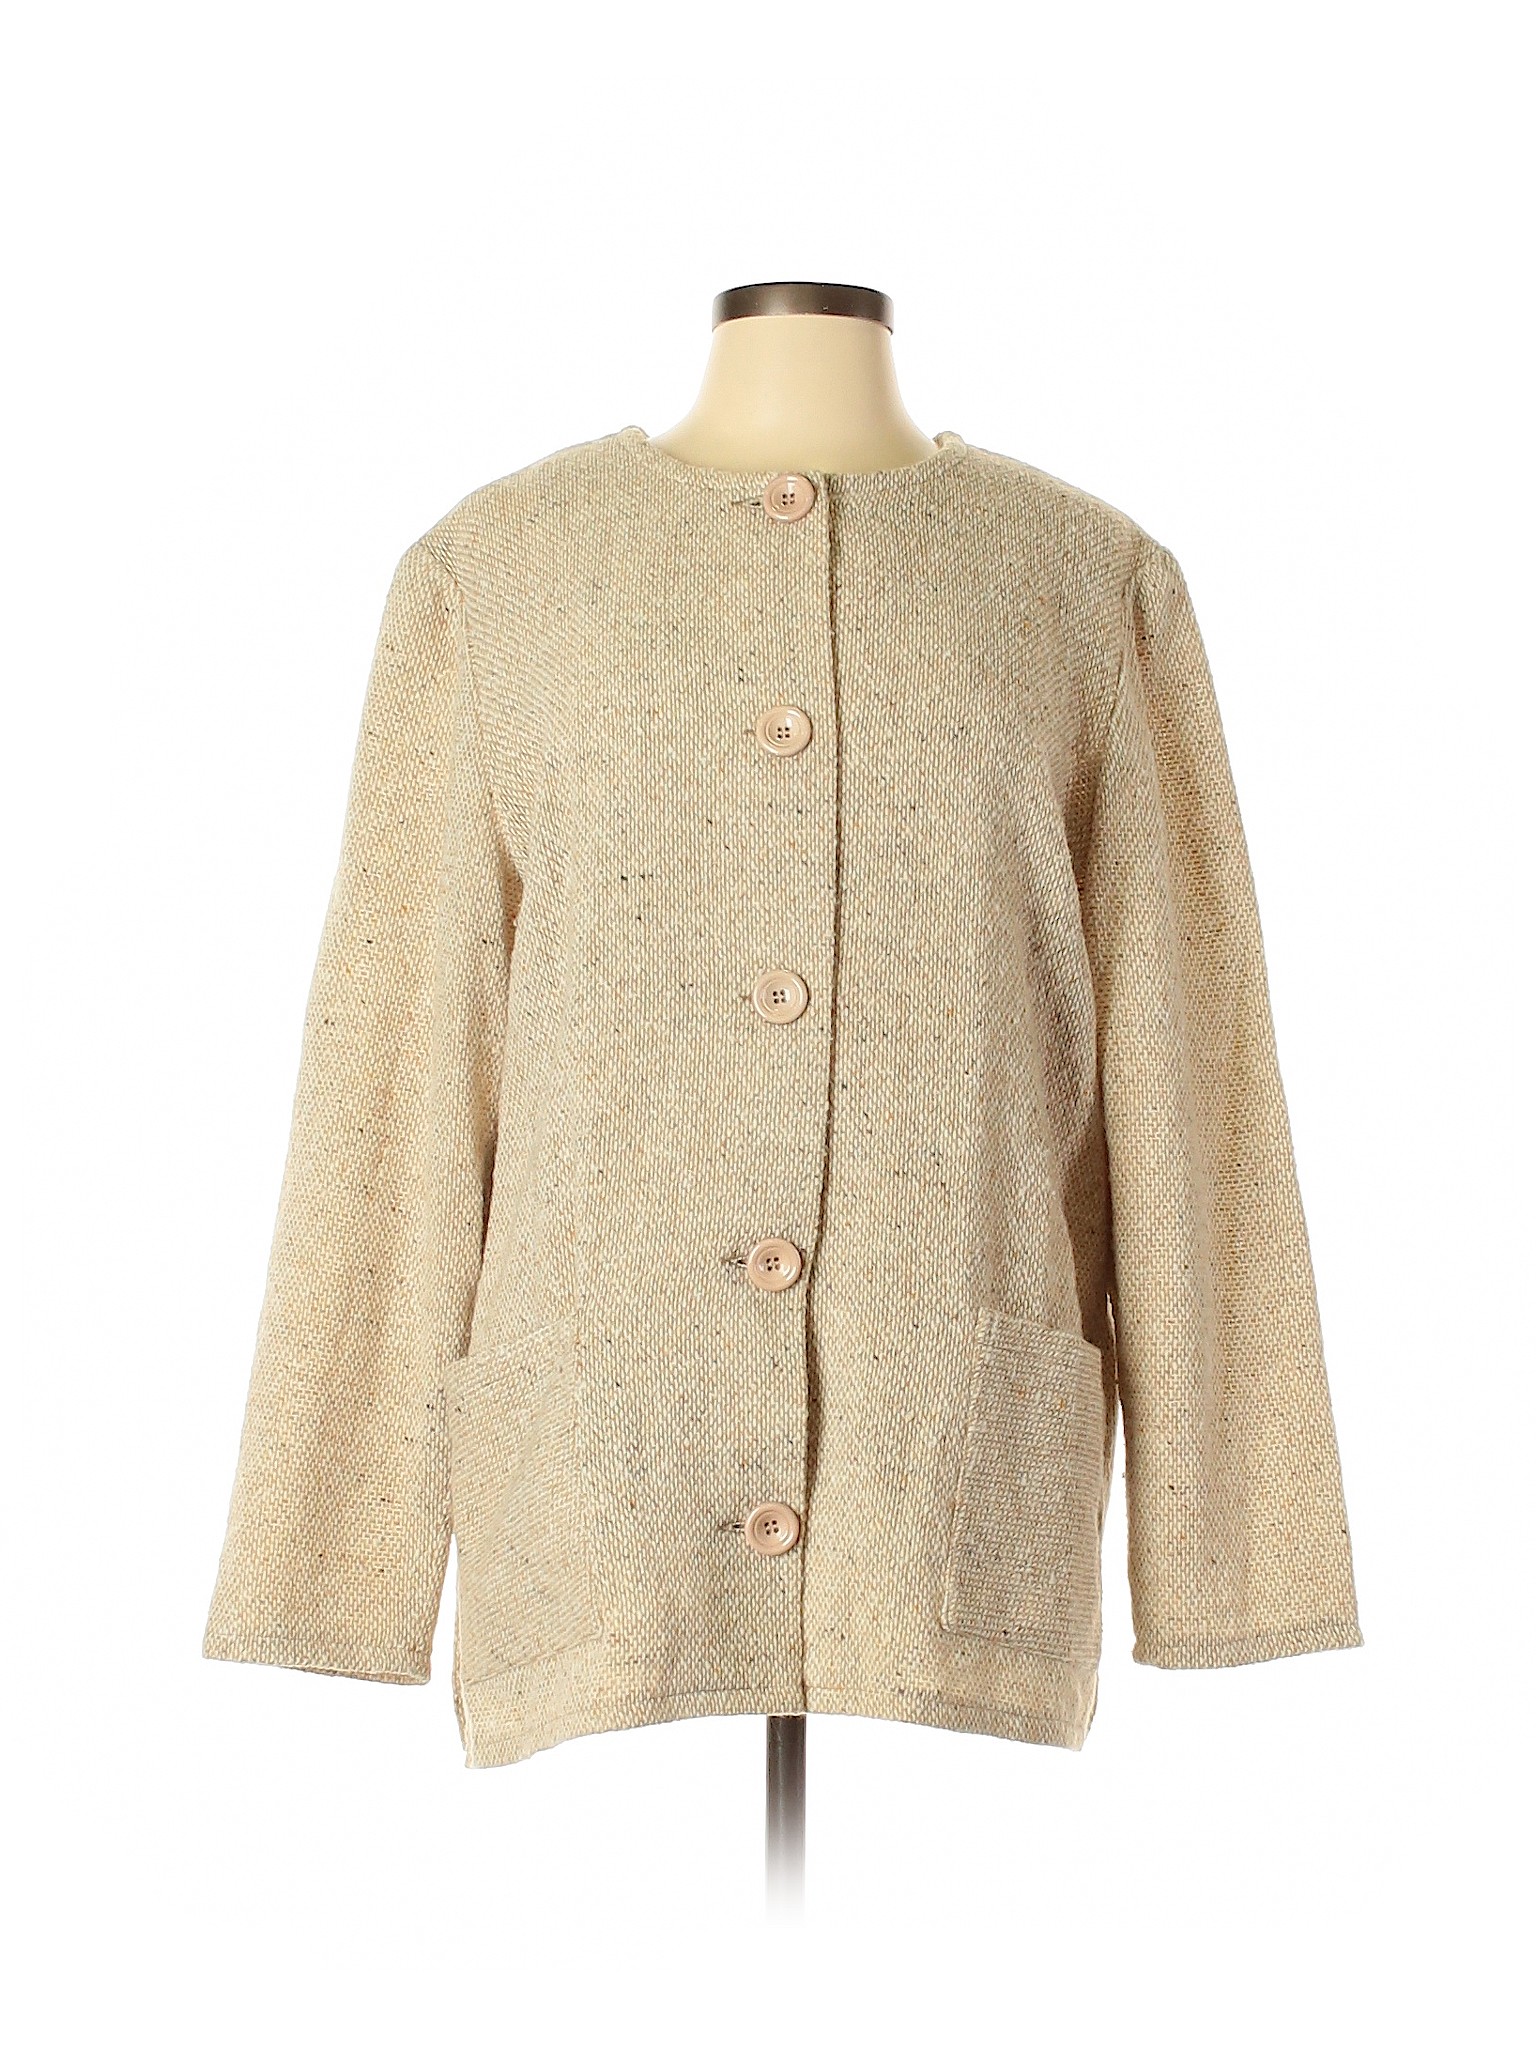 Boyne Valley Weavers Floral Tan Wool Cardigan Size L - 90% off | thredUP